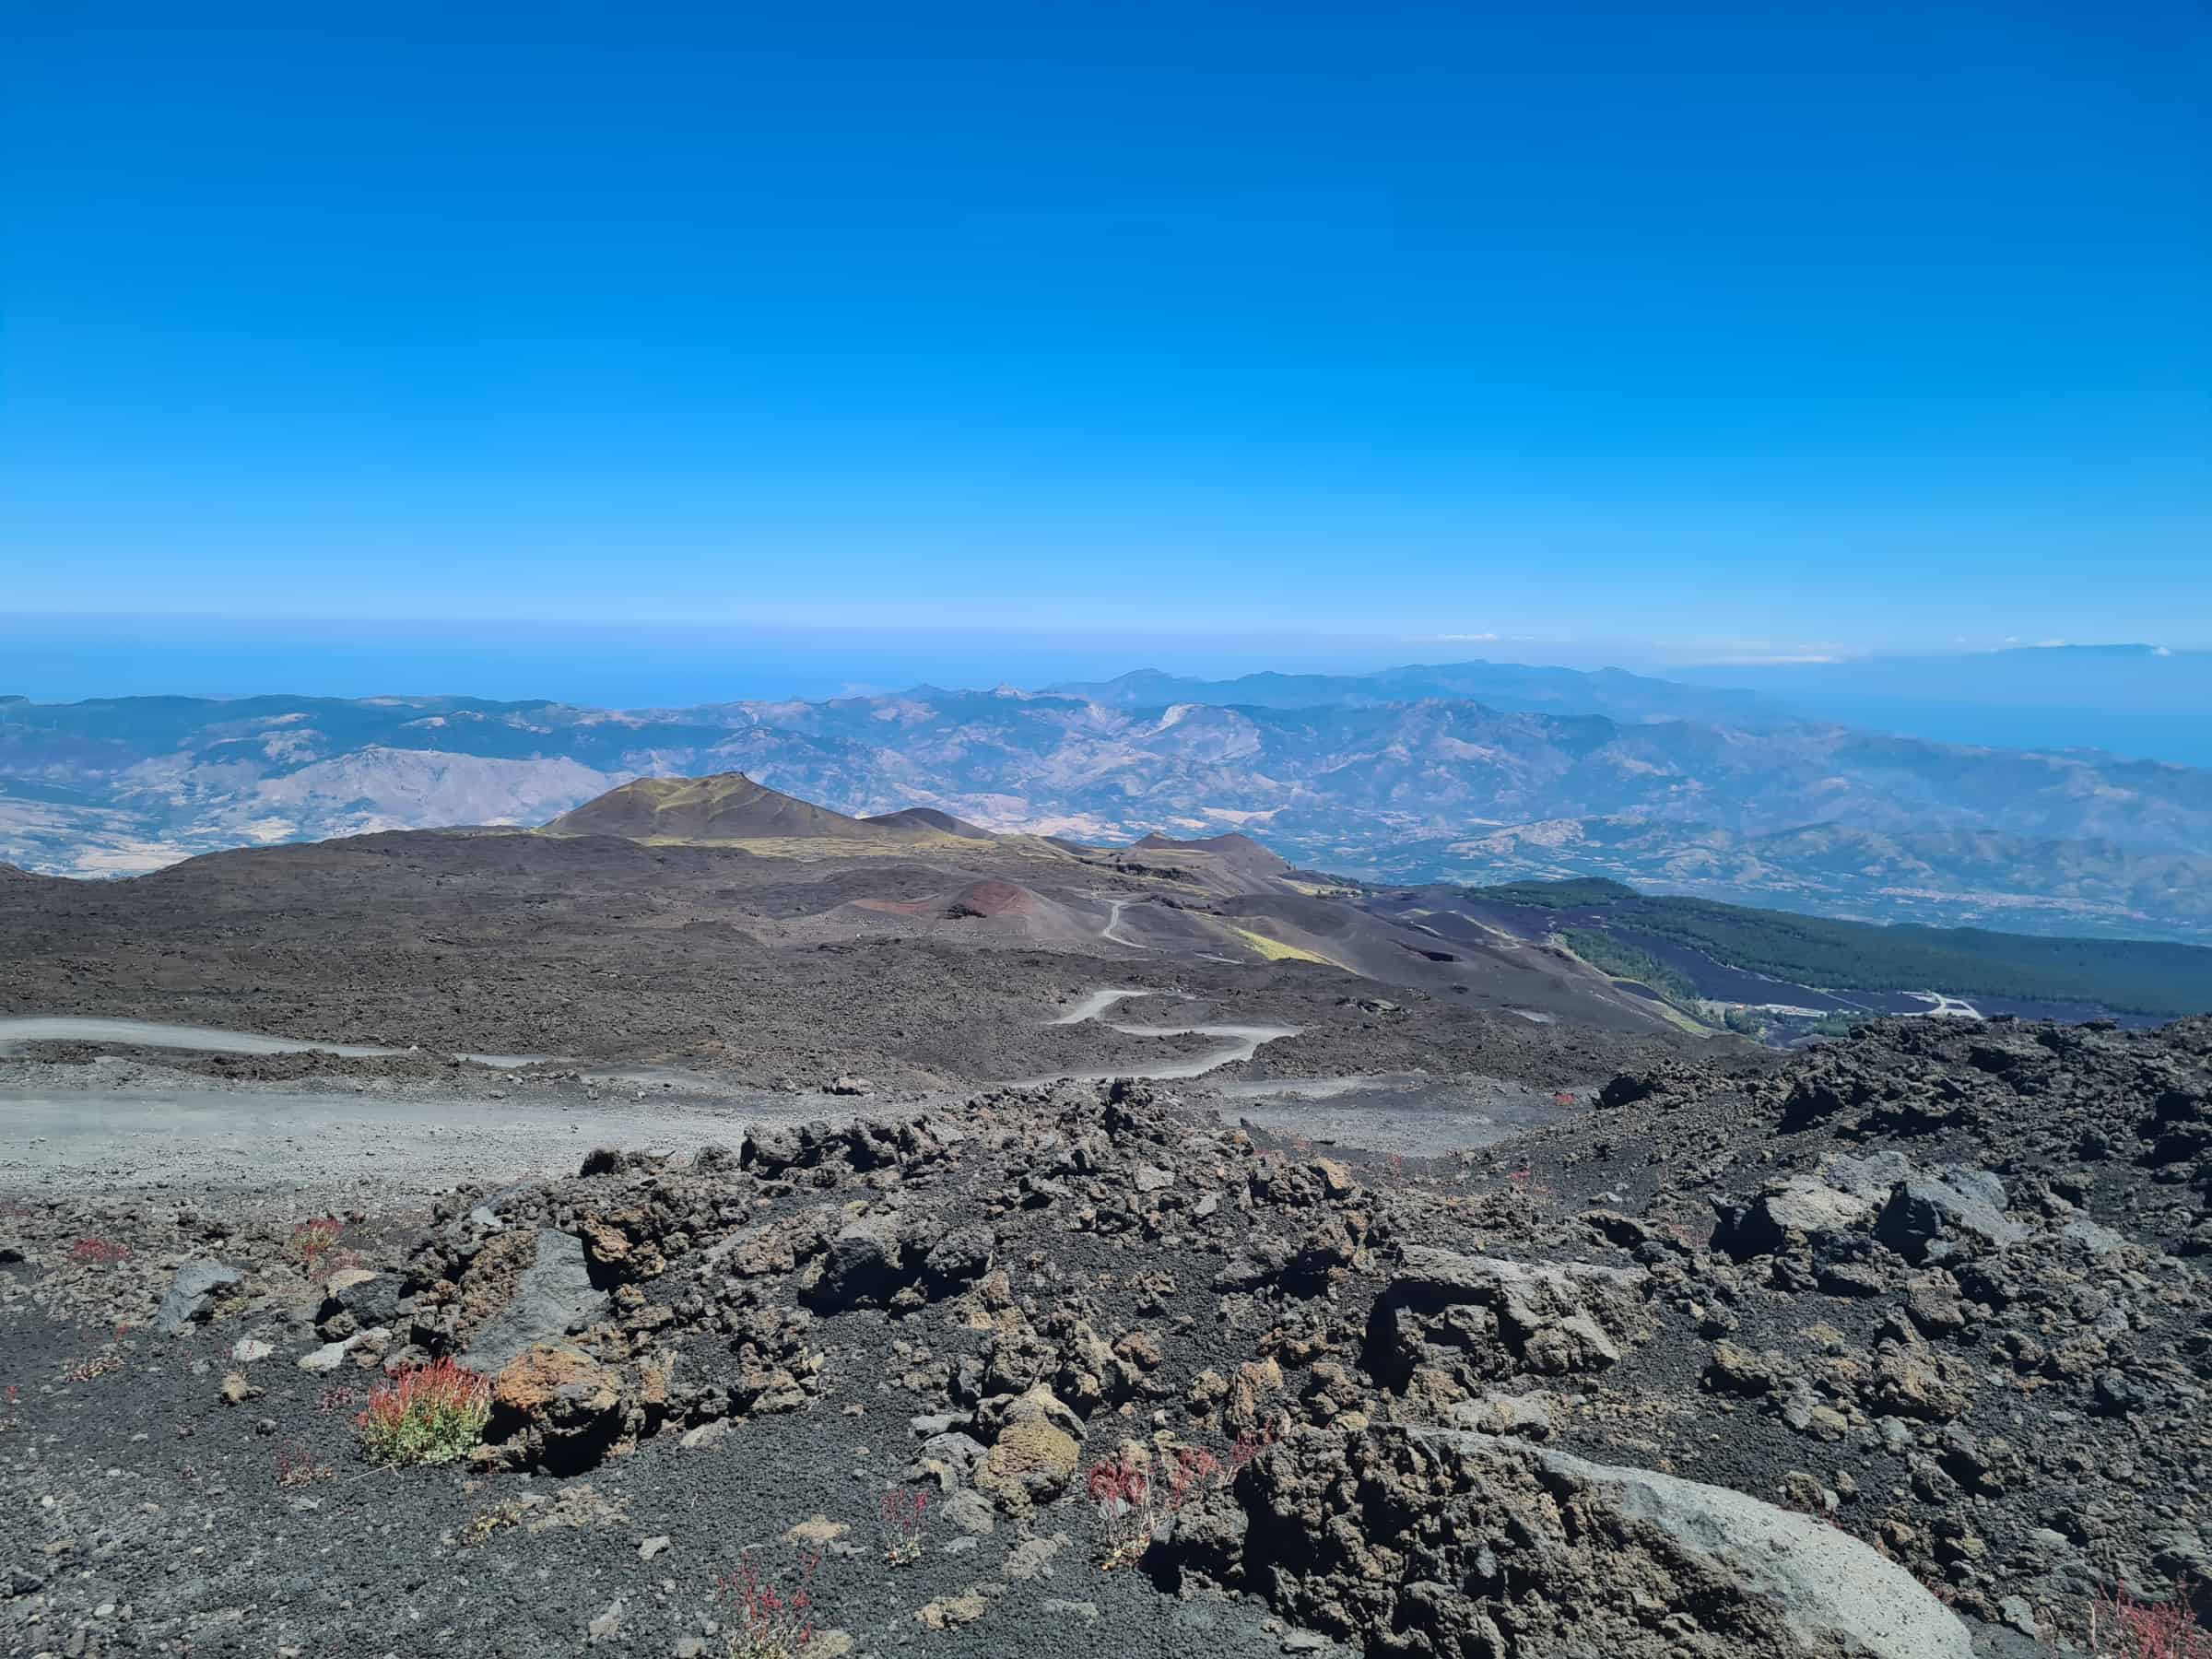 Strada per salire all'osservatorio Etna